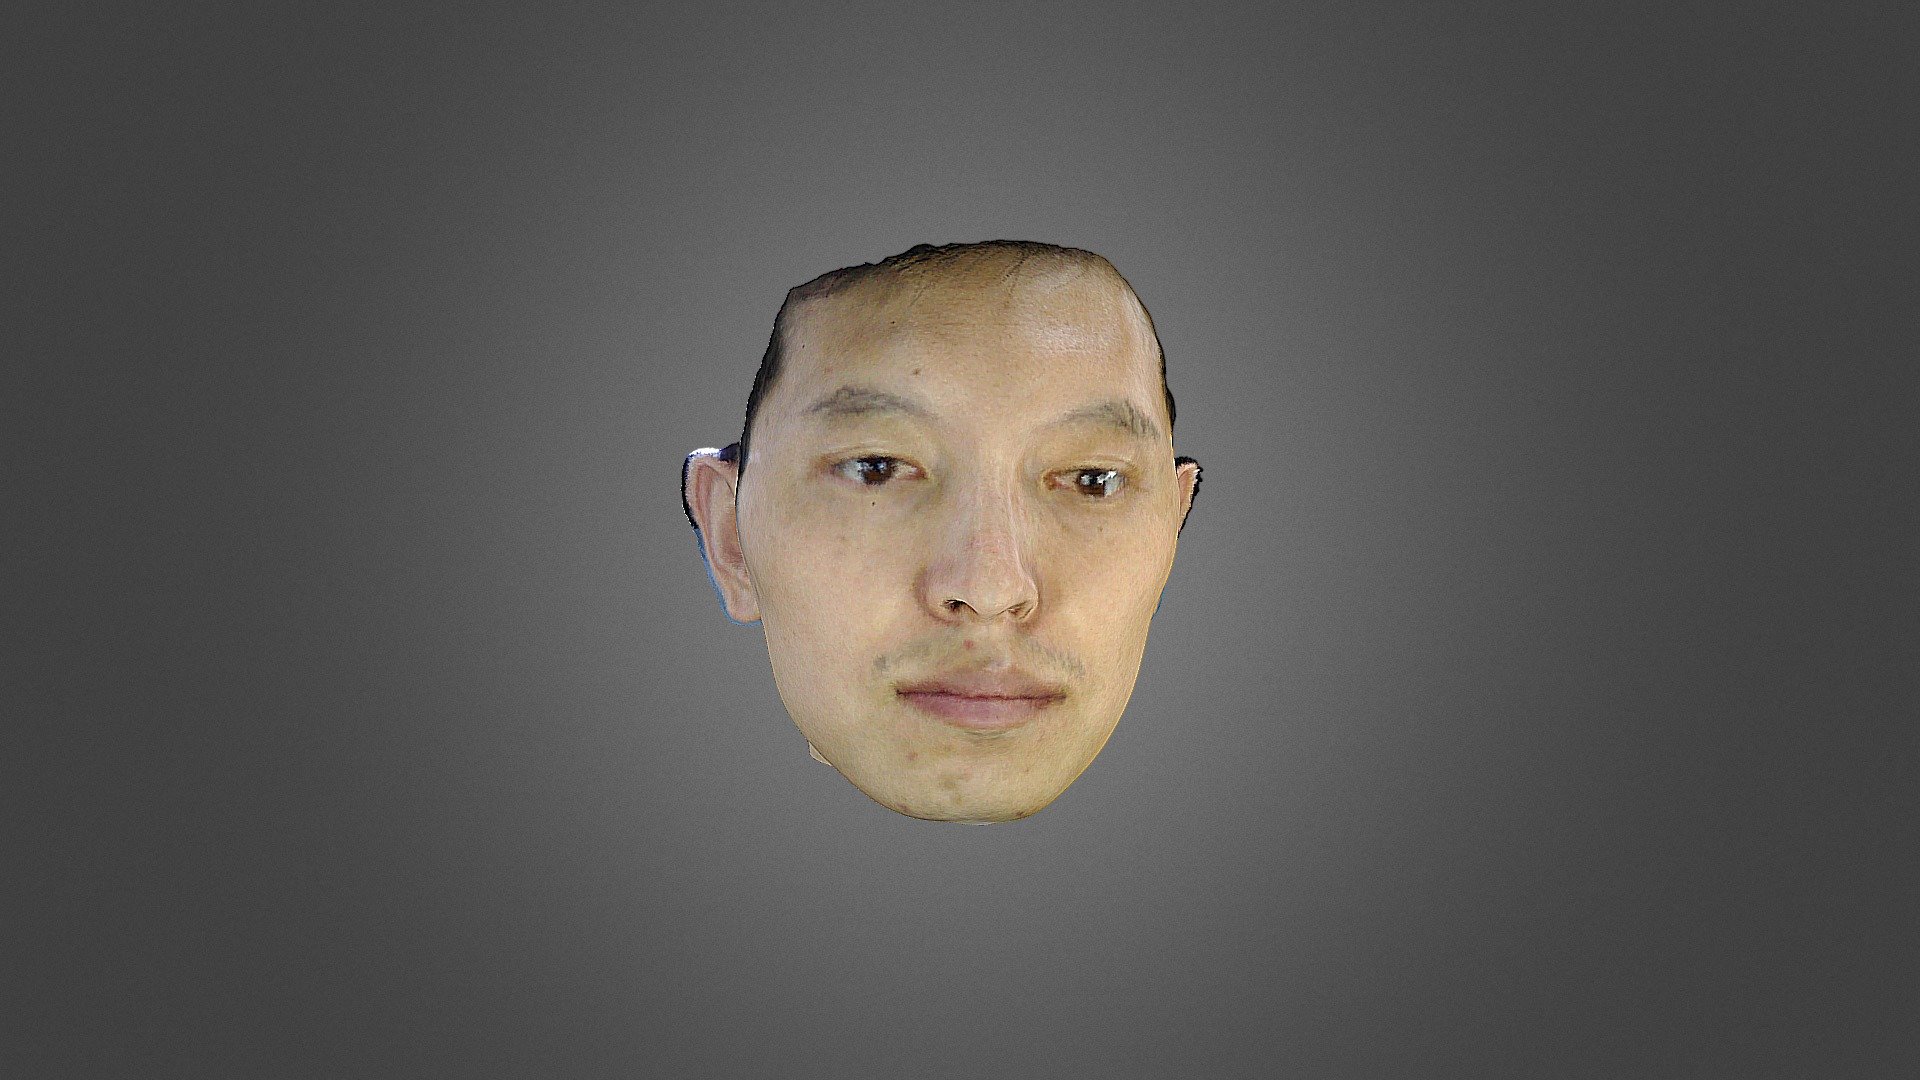 Structured-light 3D human face scanner